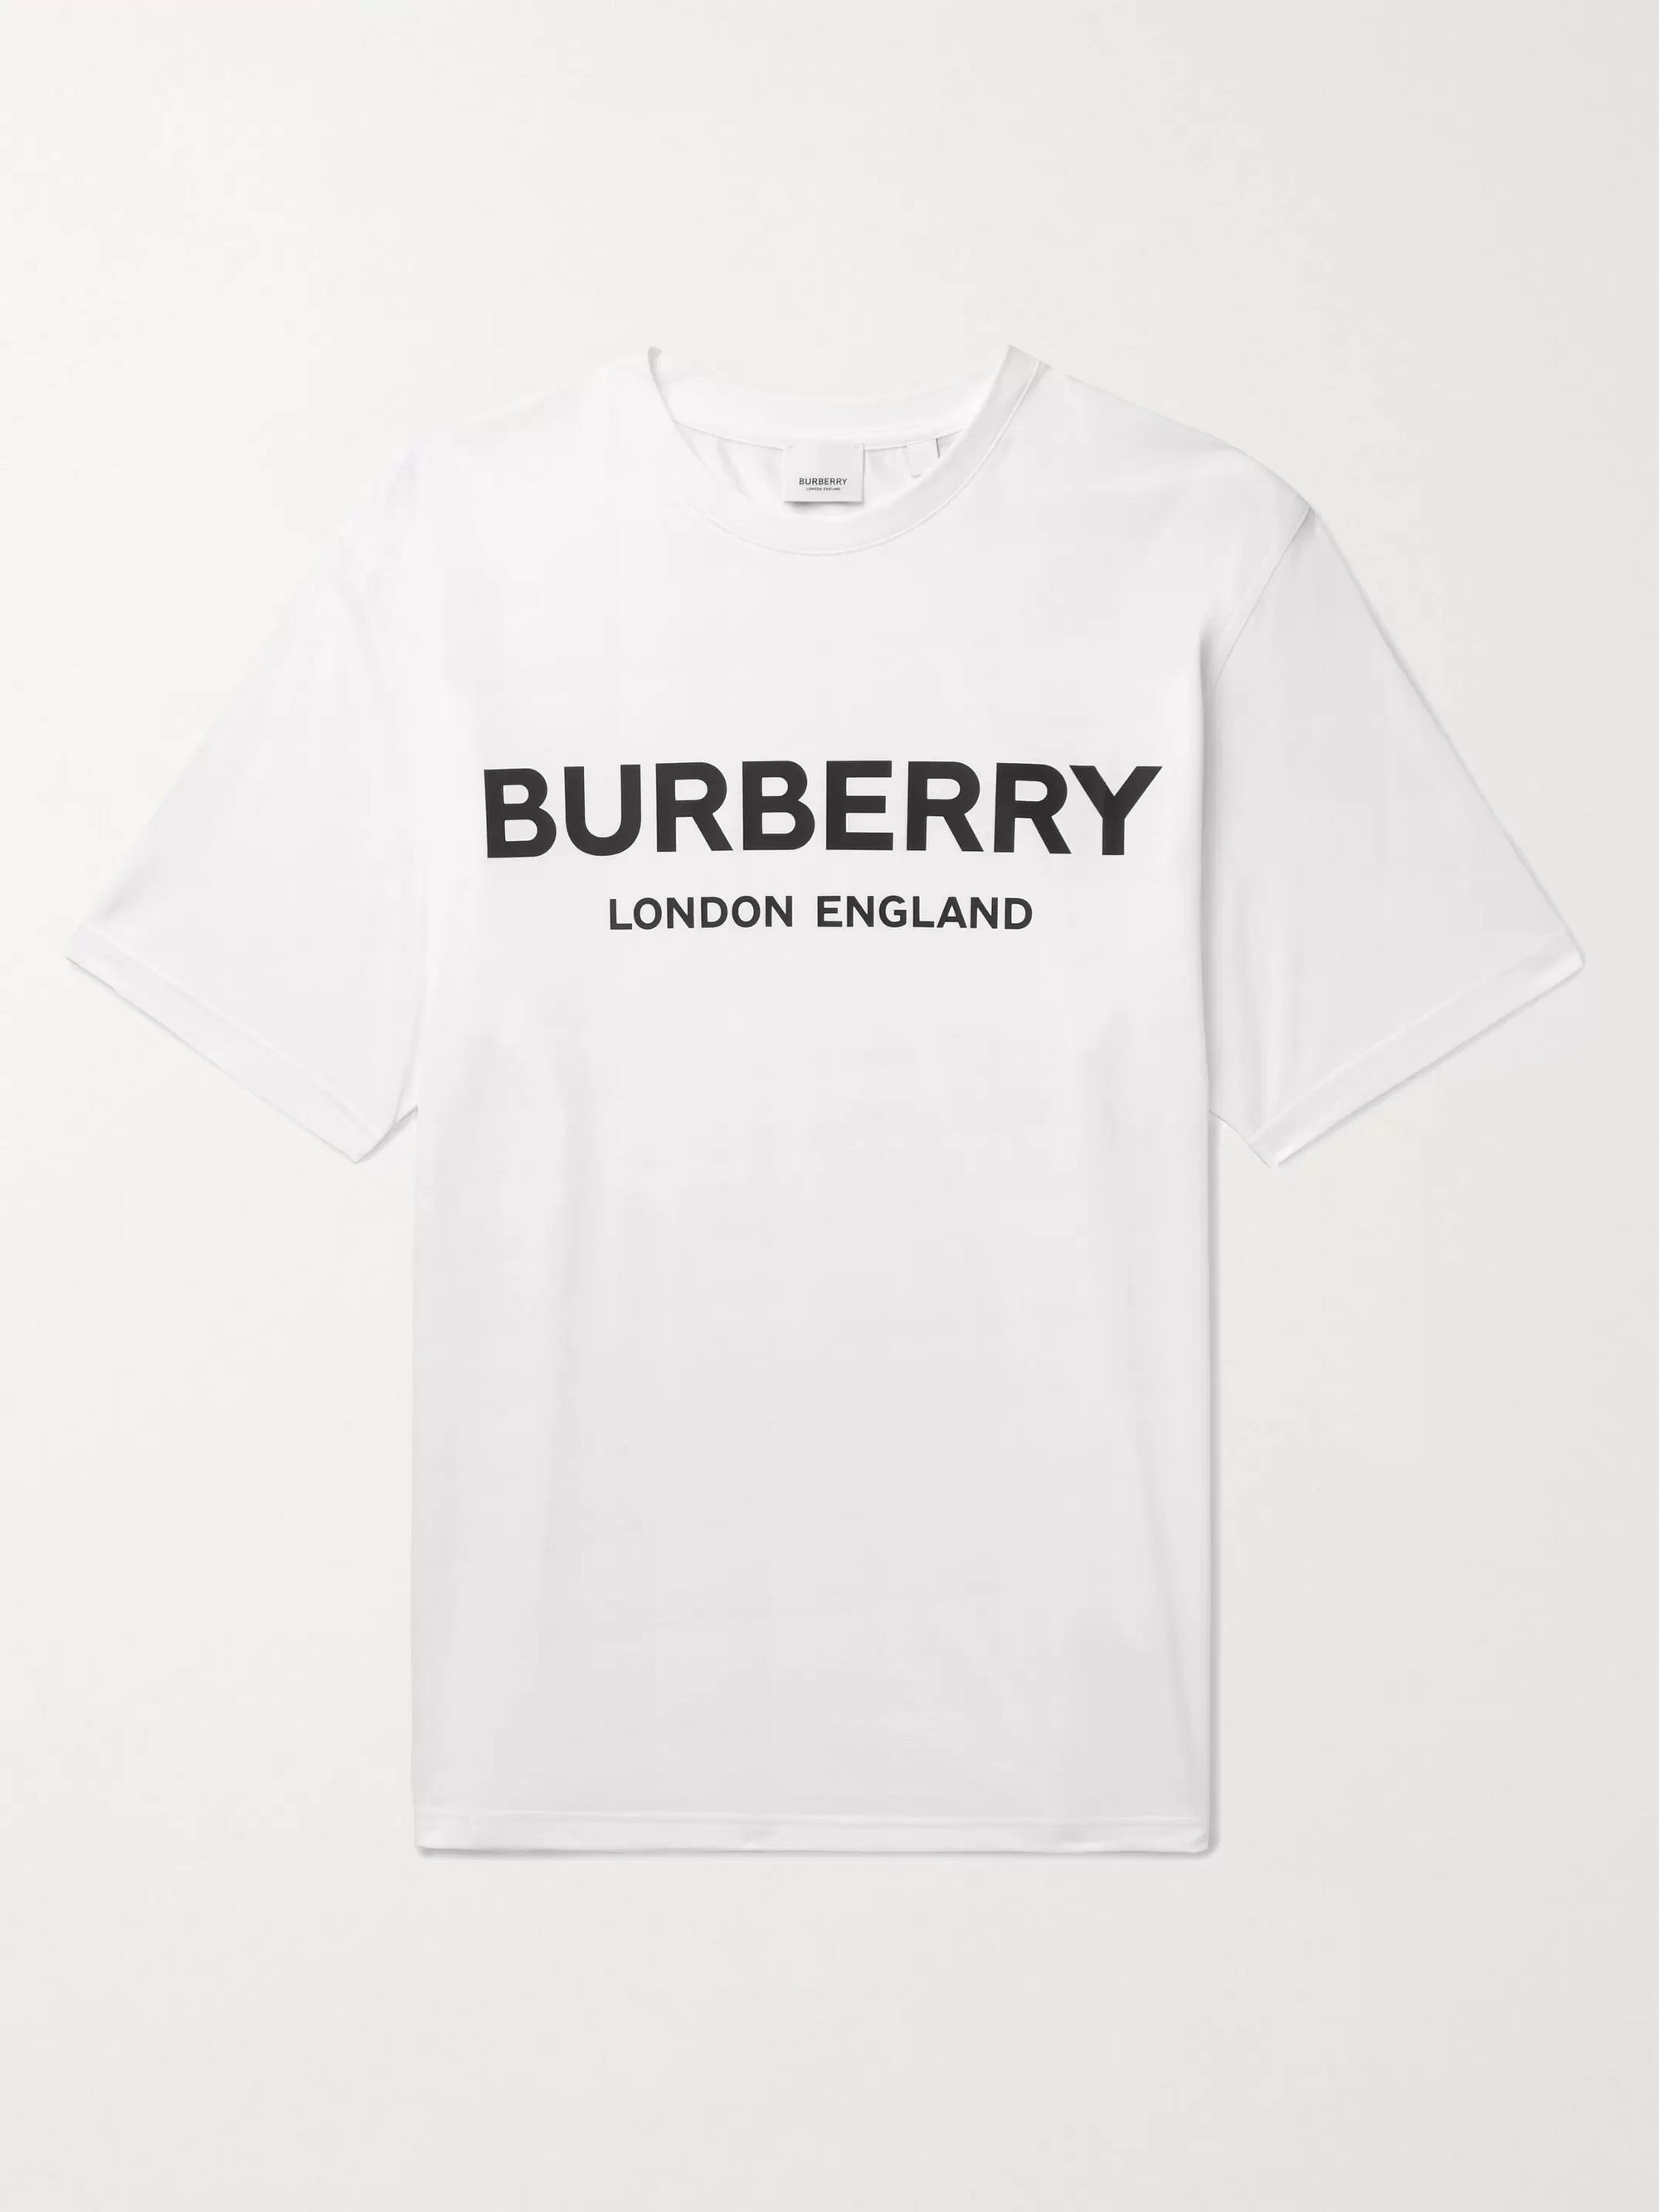 burberry black and white shirt